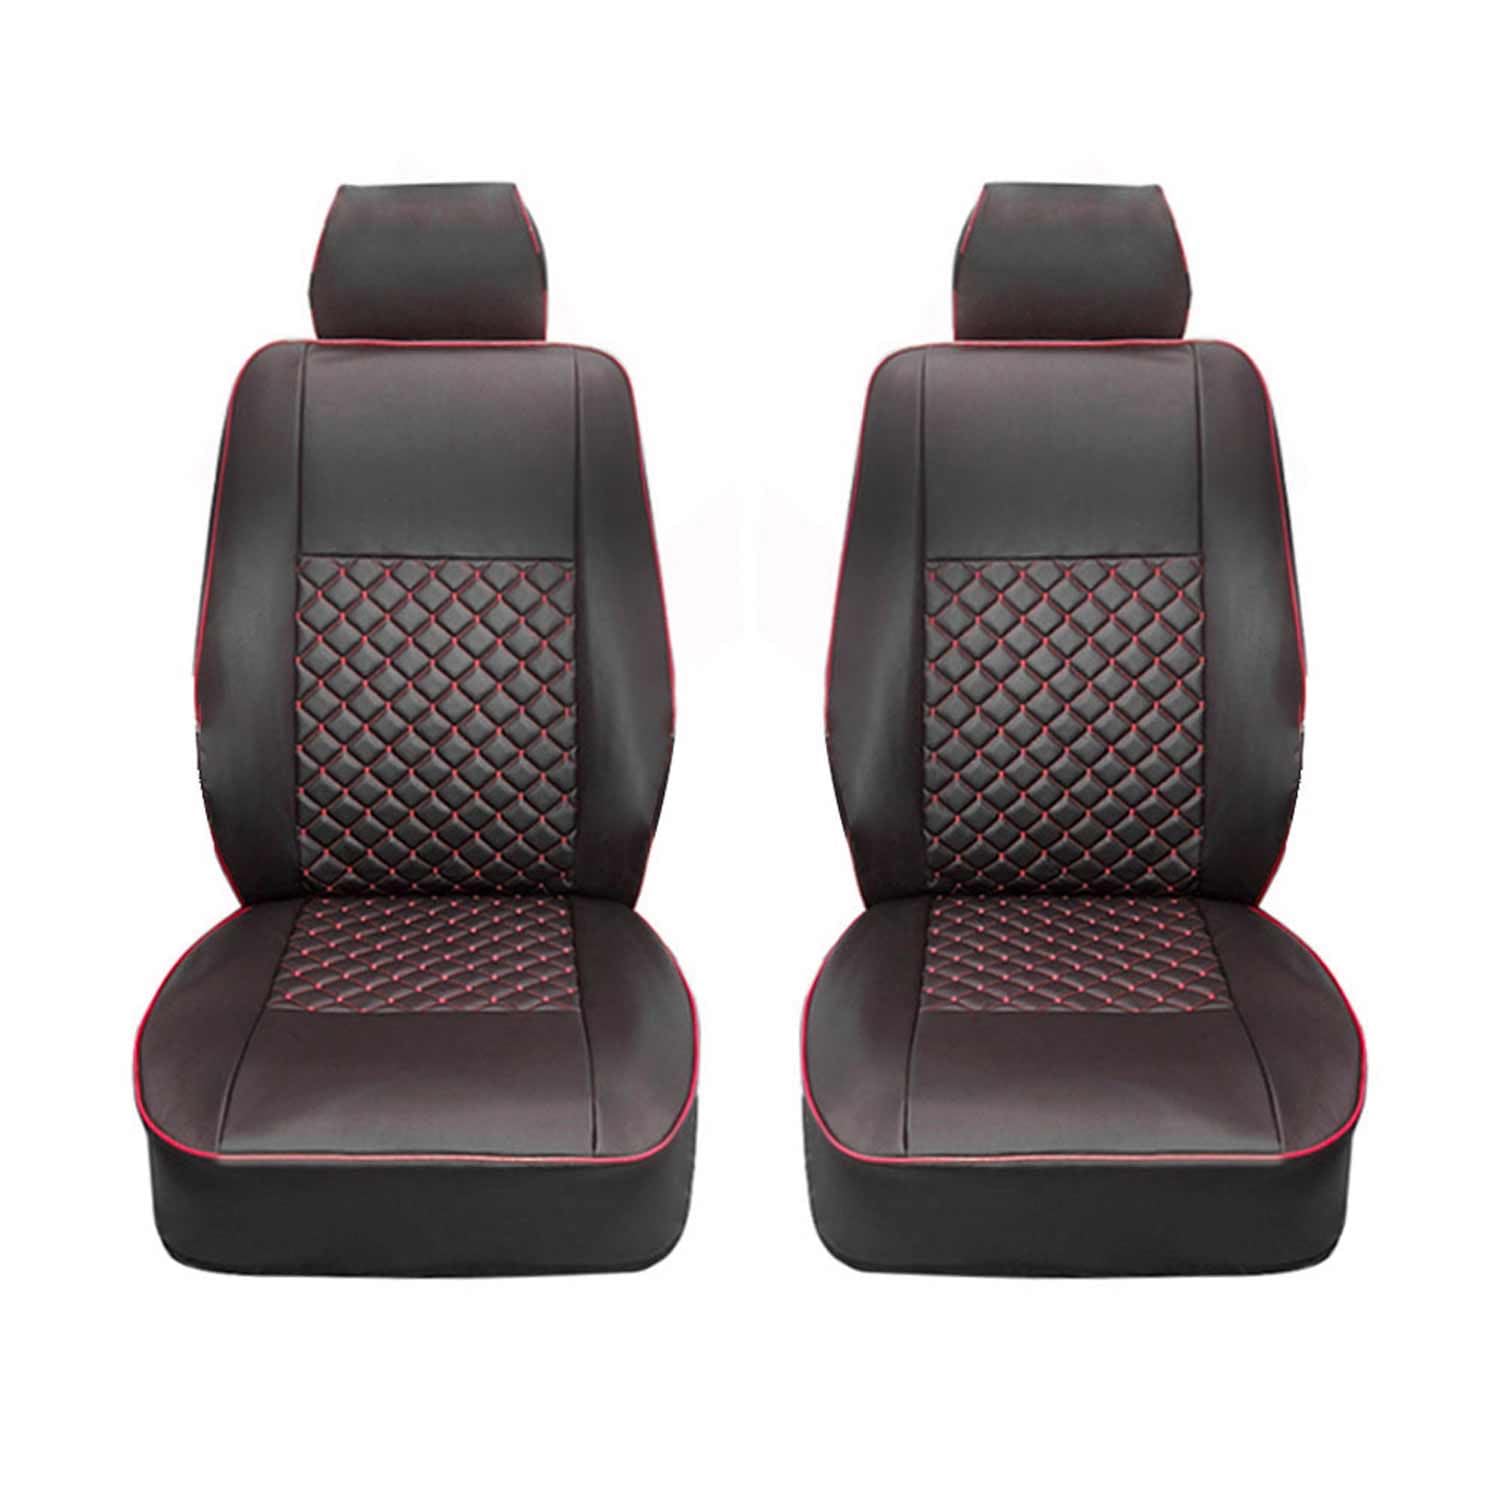 OMAC Kunstleder Sitzbezug Sitzbezüge kompatibel mit VW T5 T6 Caravelle Multivan Schwar Leder 1+1 von OMAC